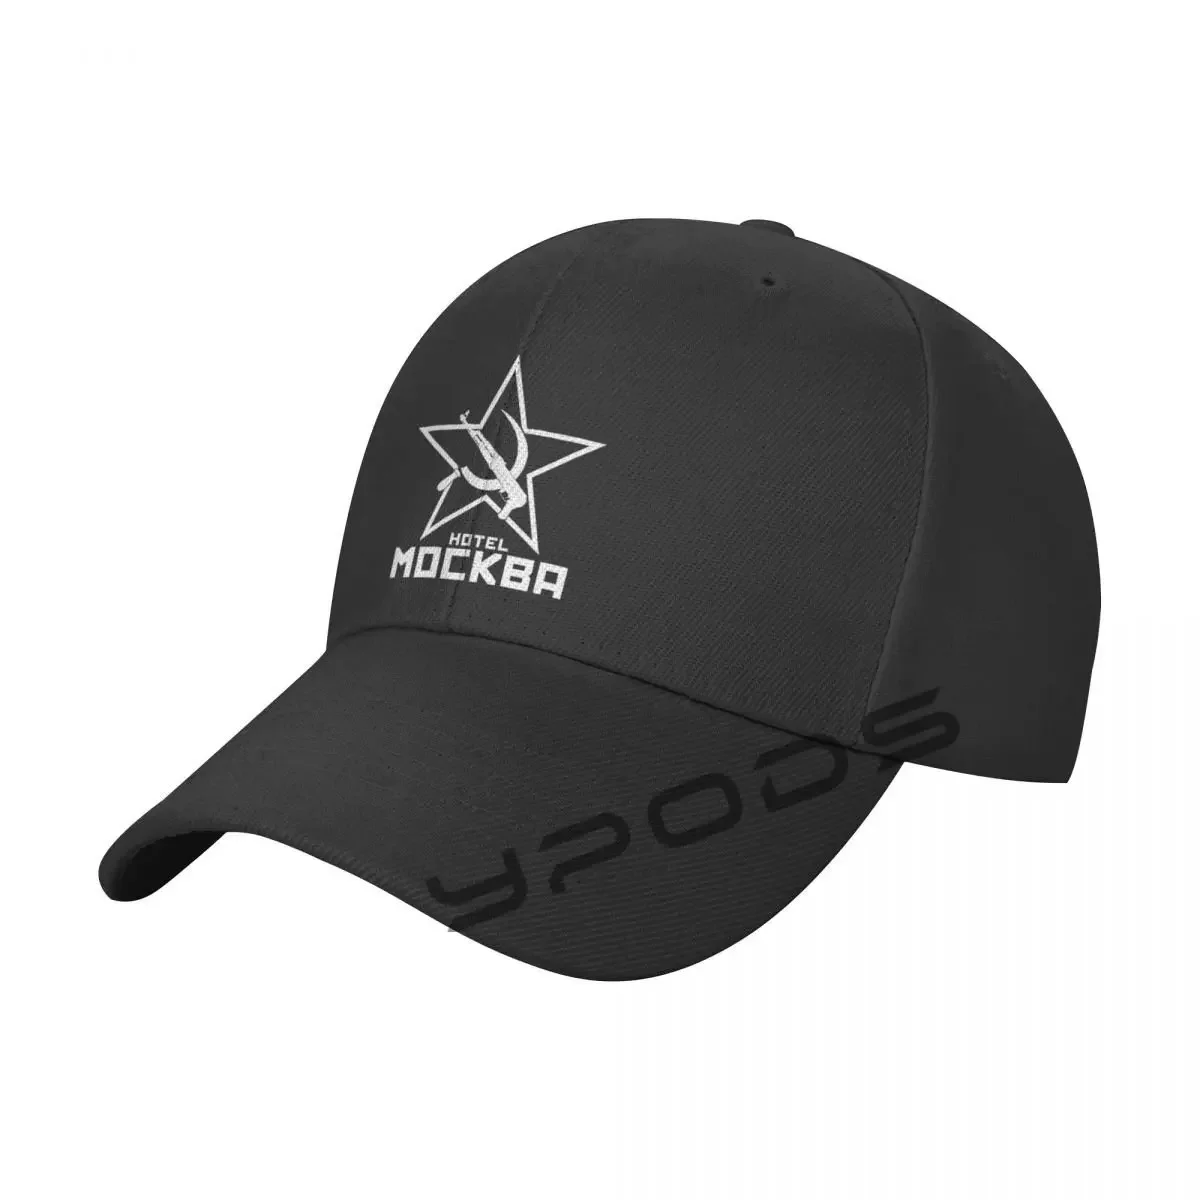 

Hotel Moscow Baseball Caps For Men Snapback Plain Solid Color Gorras Caps Hats Fashion Casquette Bone FemaLe Dad Cap